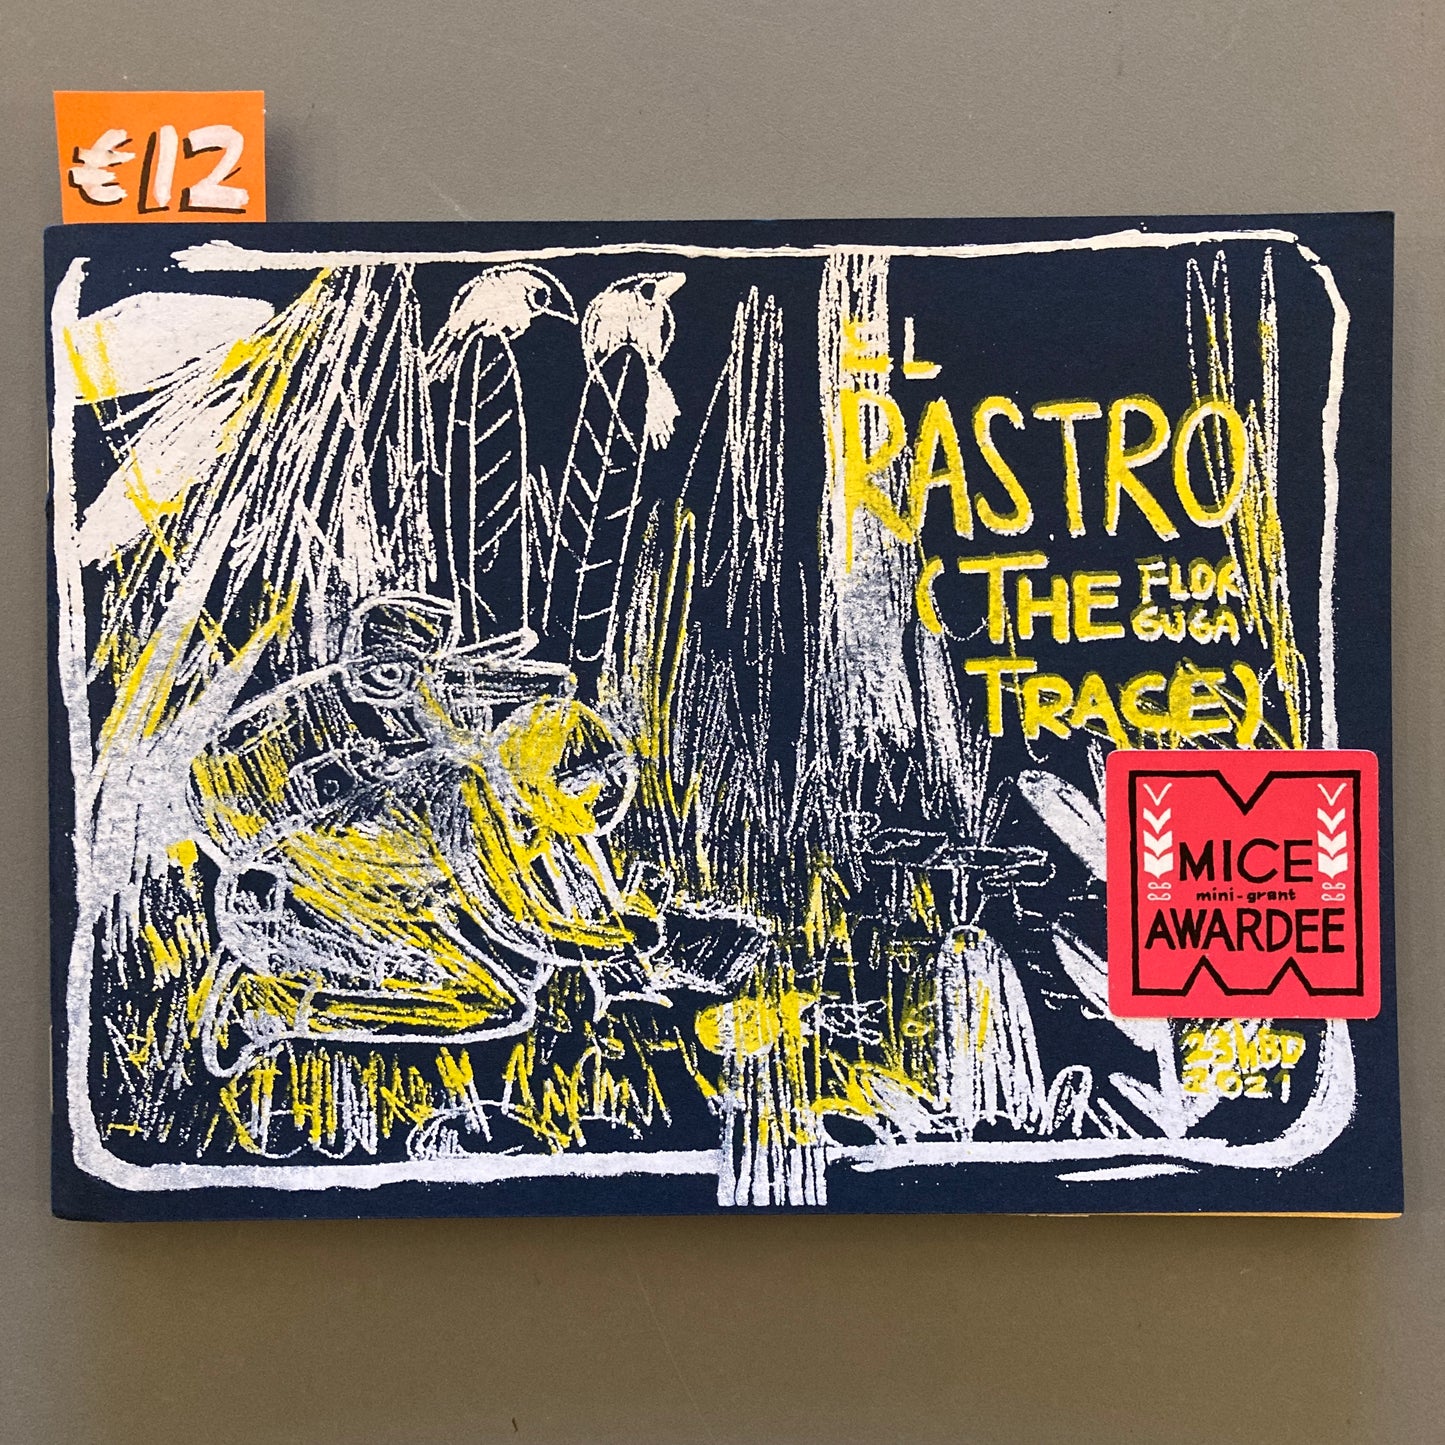 El Rastro (The Trace)